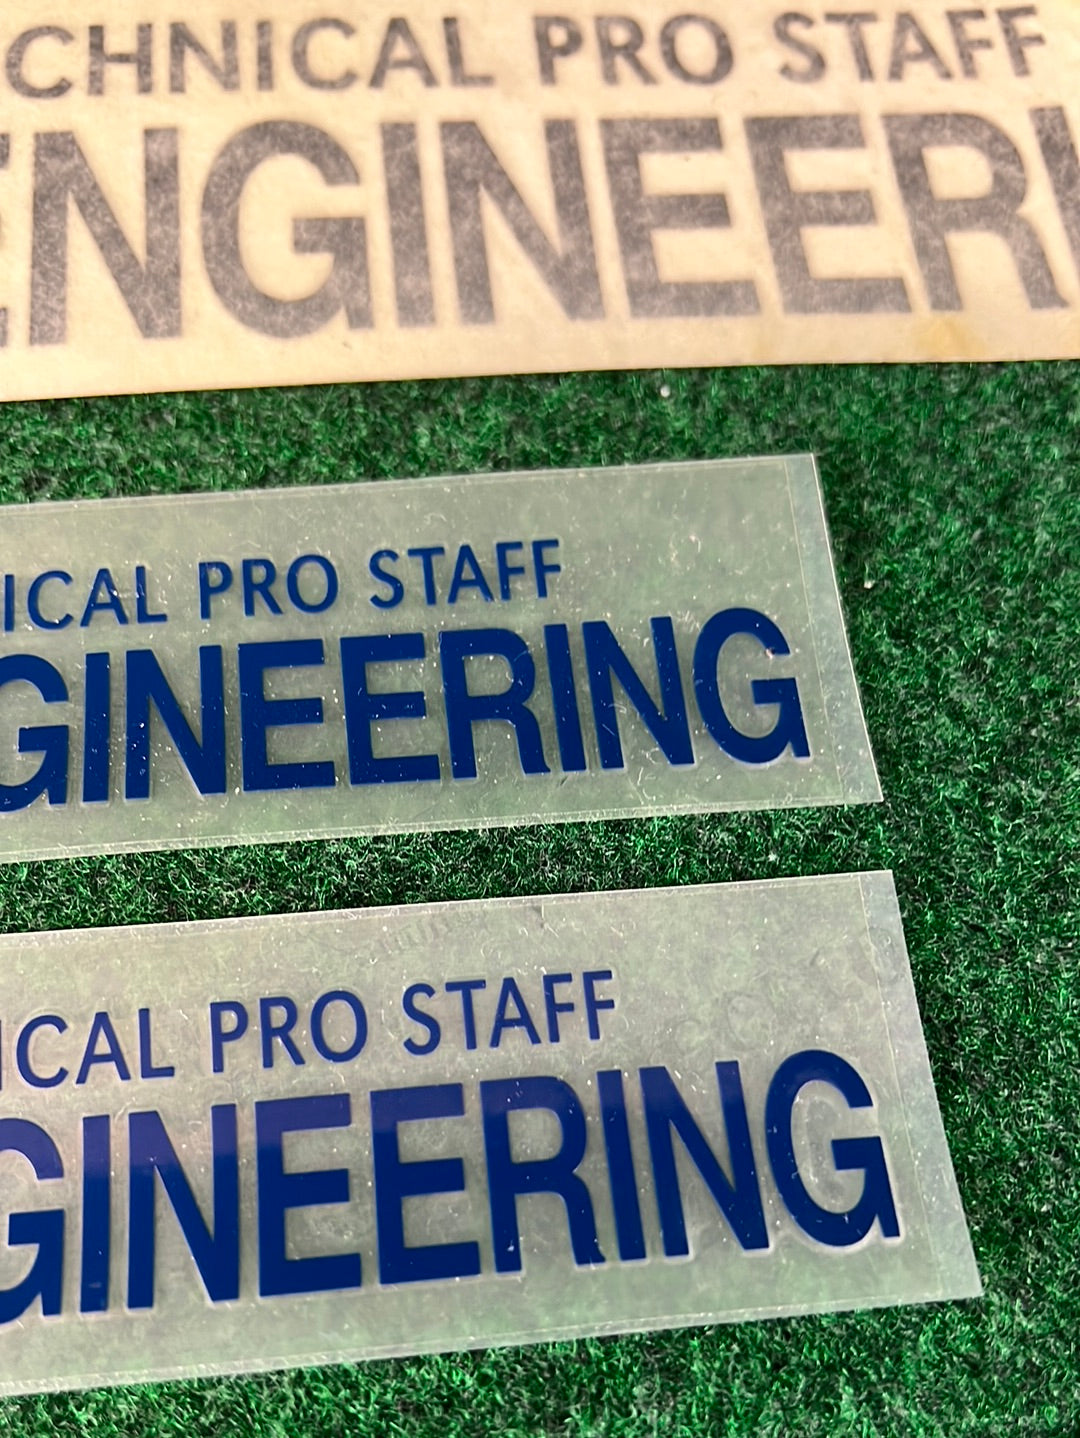 AP. Engineering Technical Pro Staff Decal Set